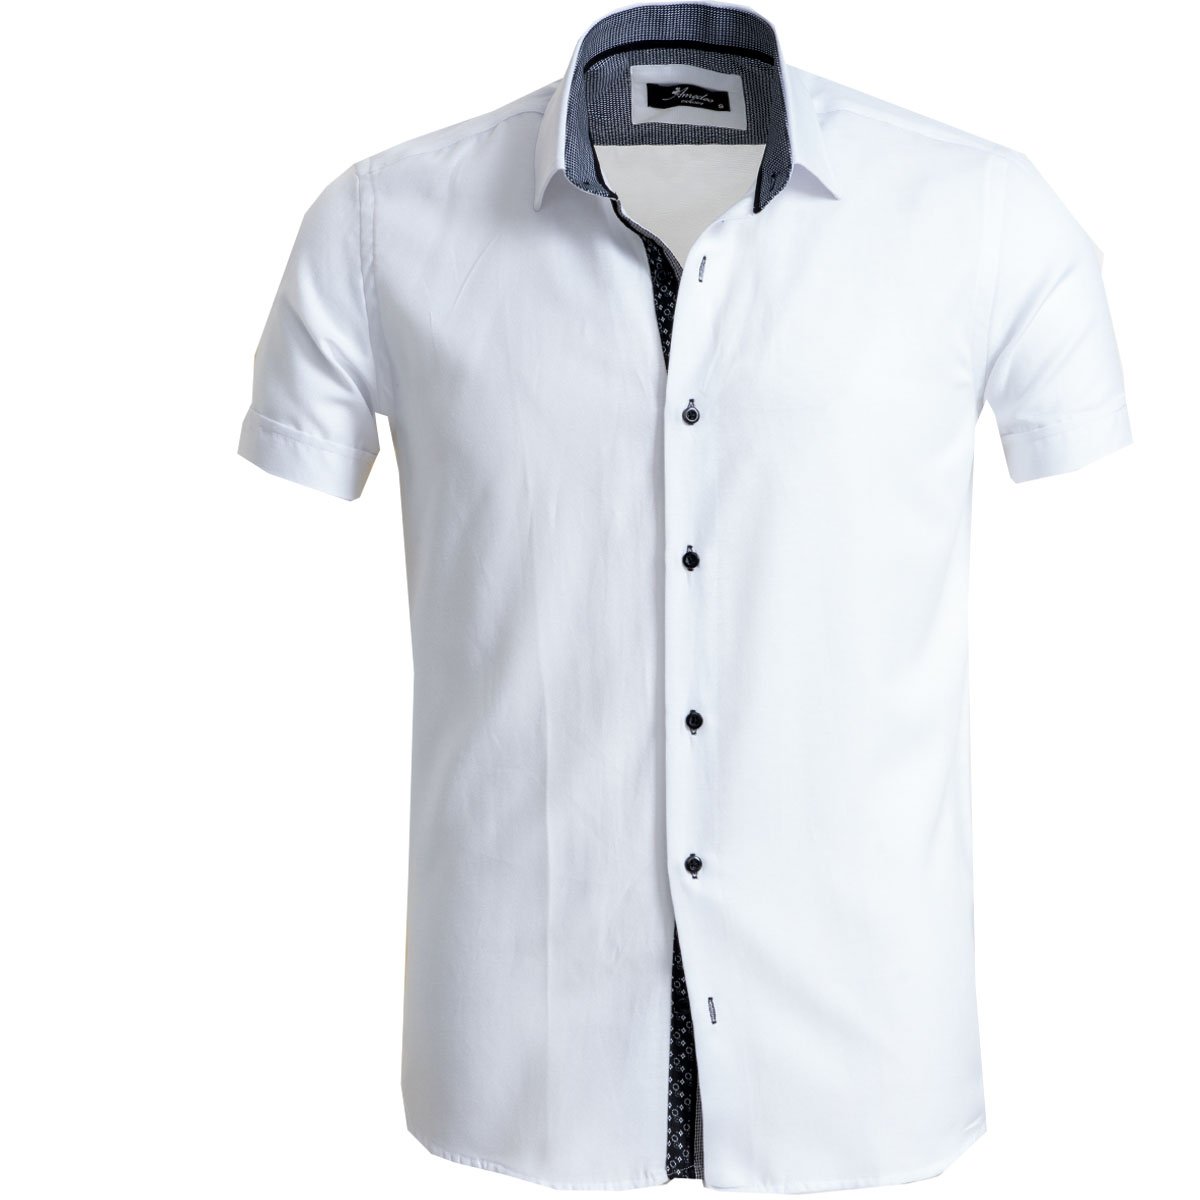 white short sleeve dress shirt